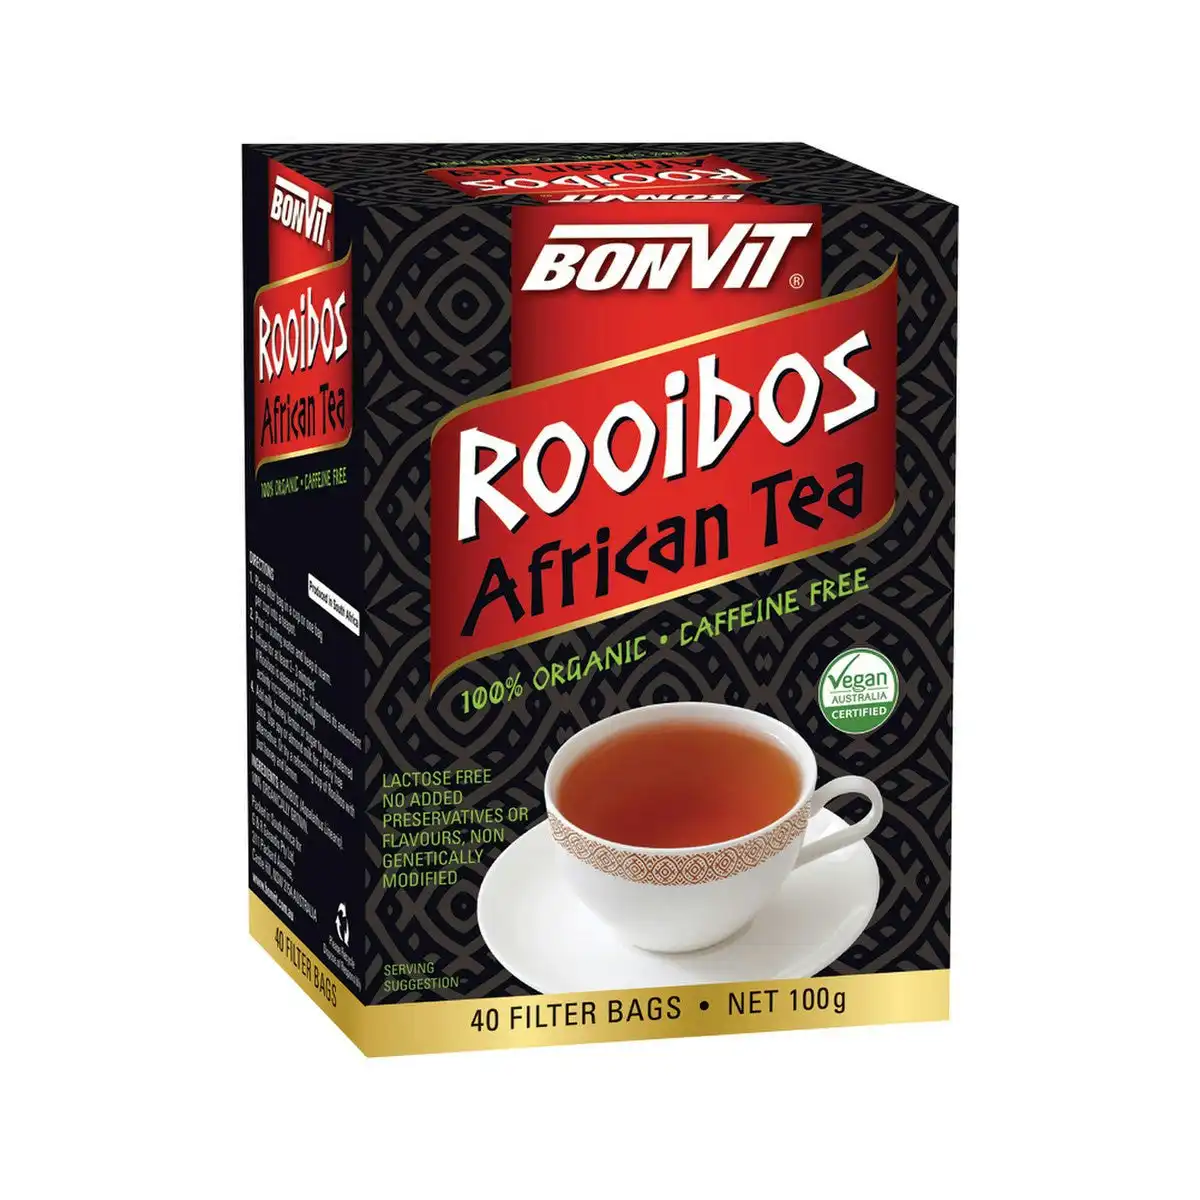 Bonvit Organic Rooibos African Tea x 40 Filter Bags